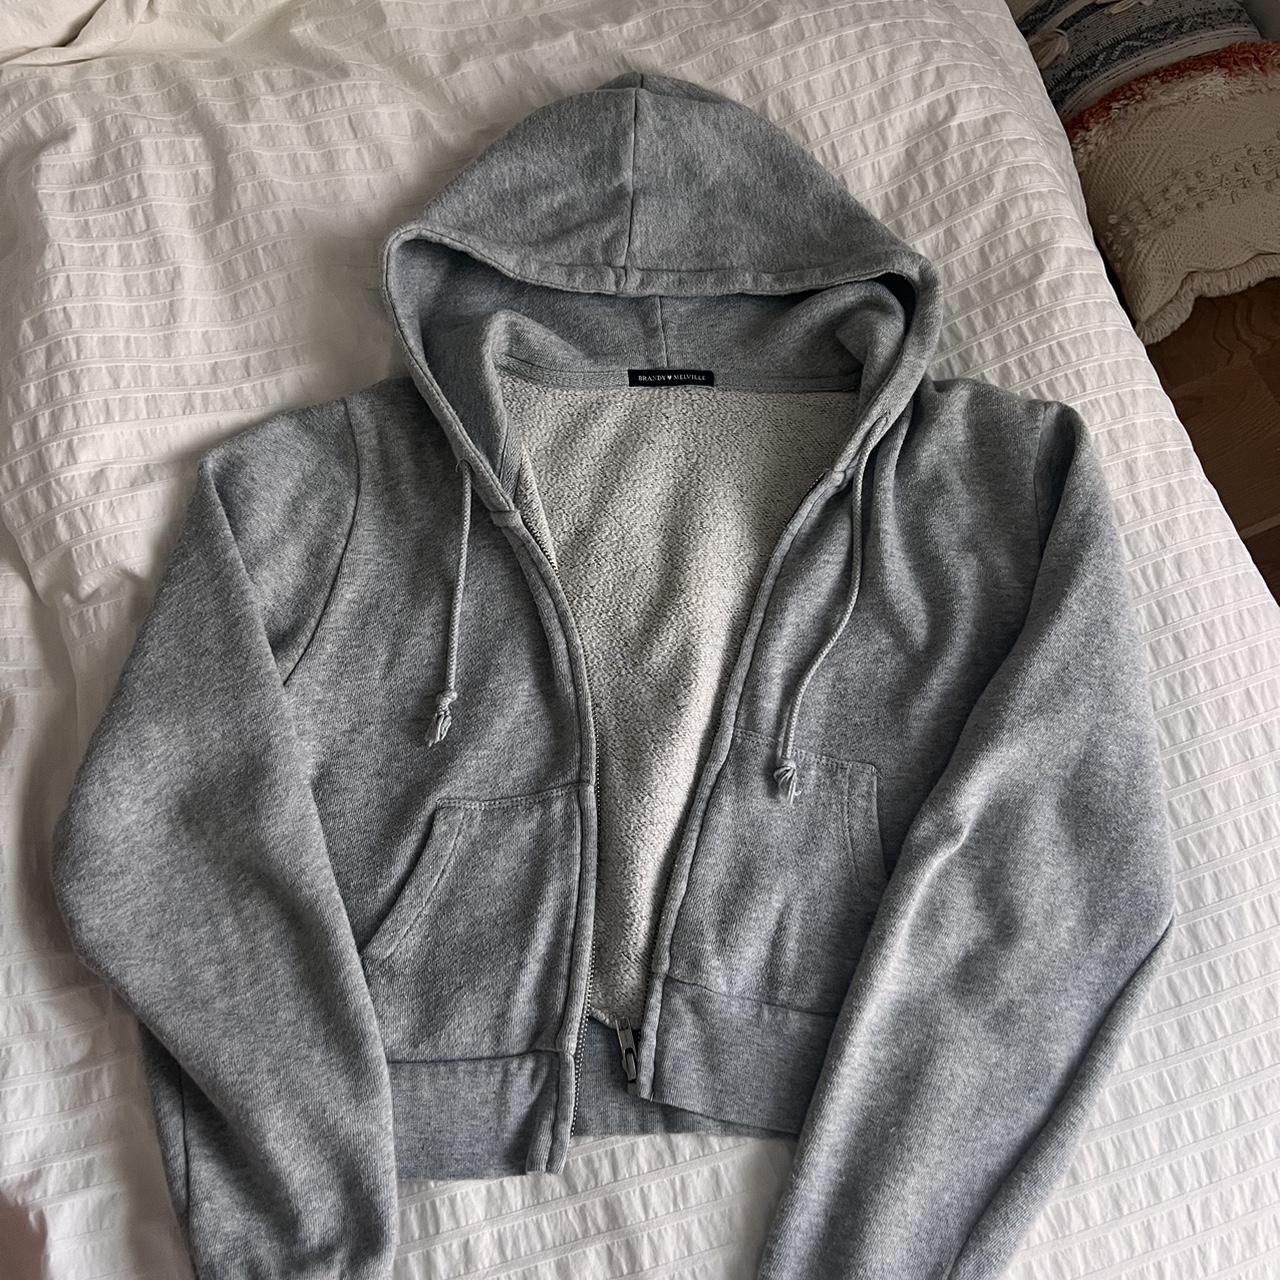 Brandy Melville grey cropped zip up sweater - one - Depop